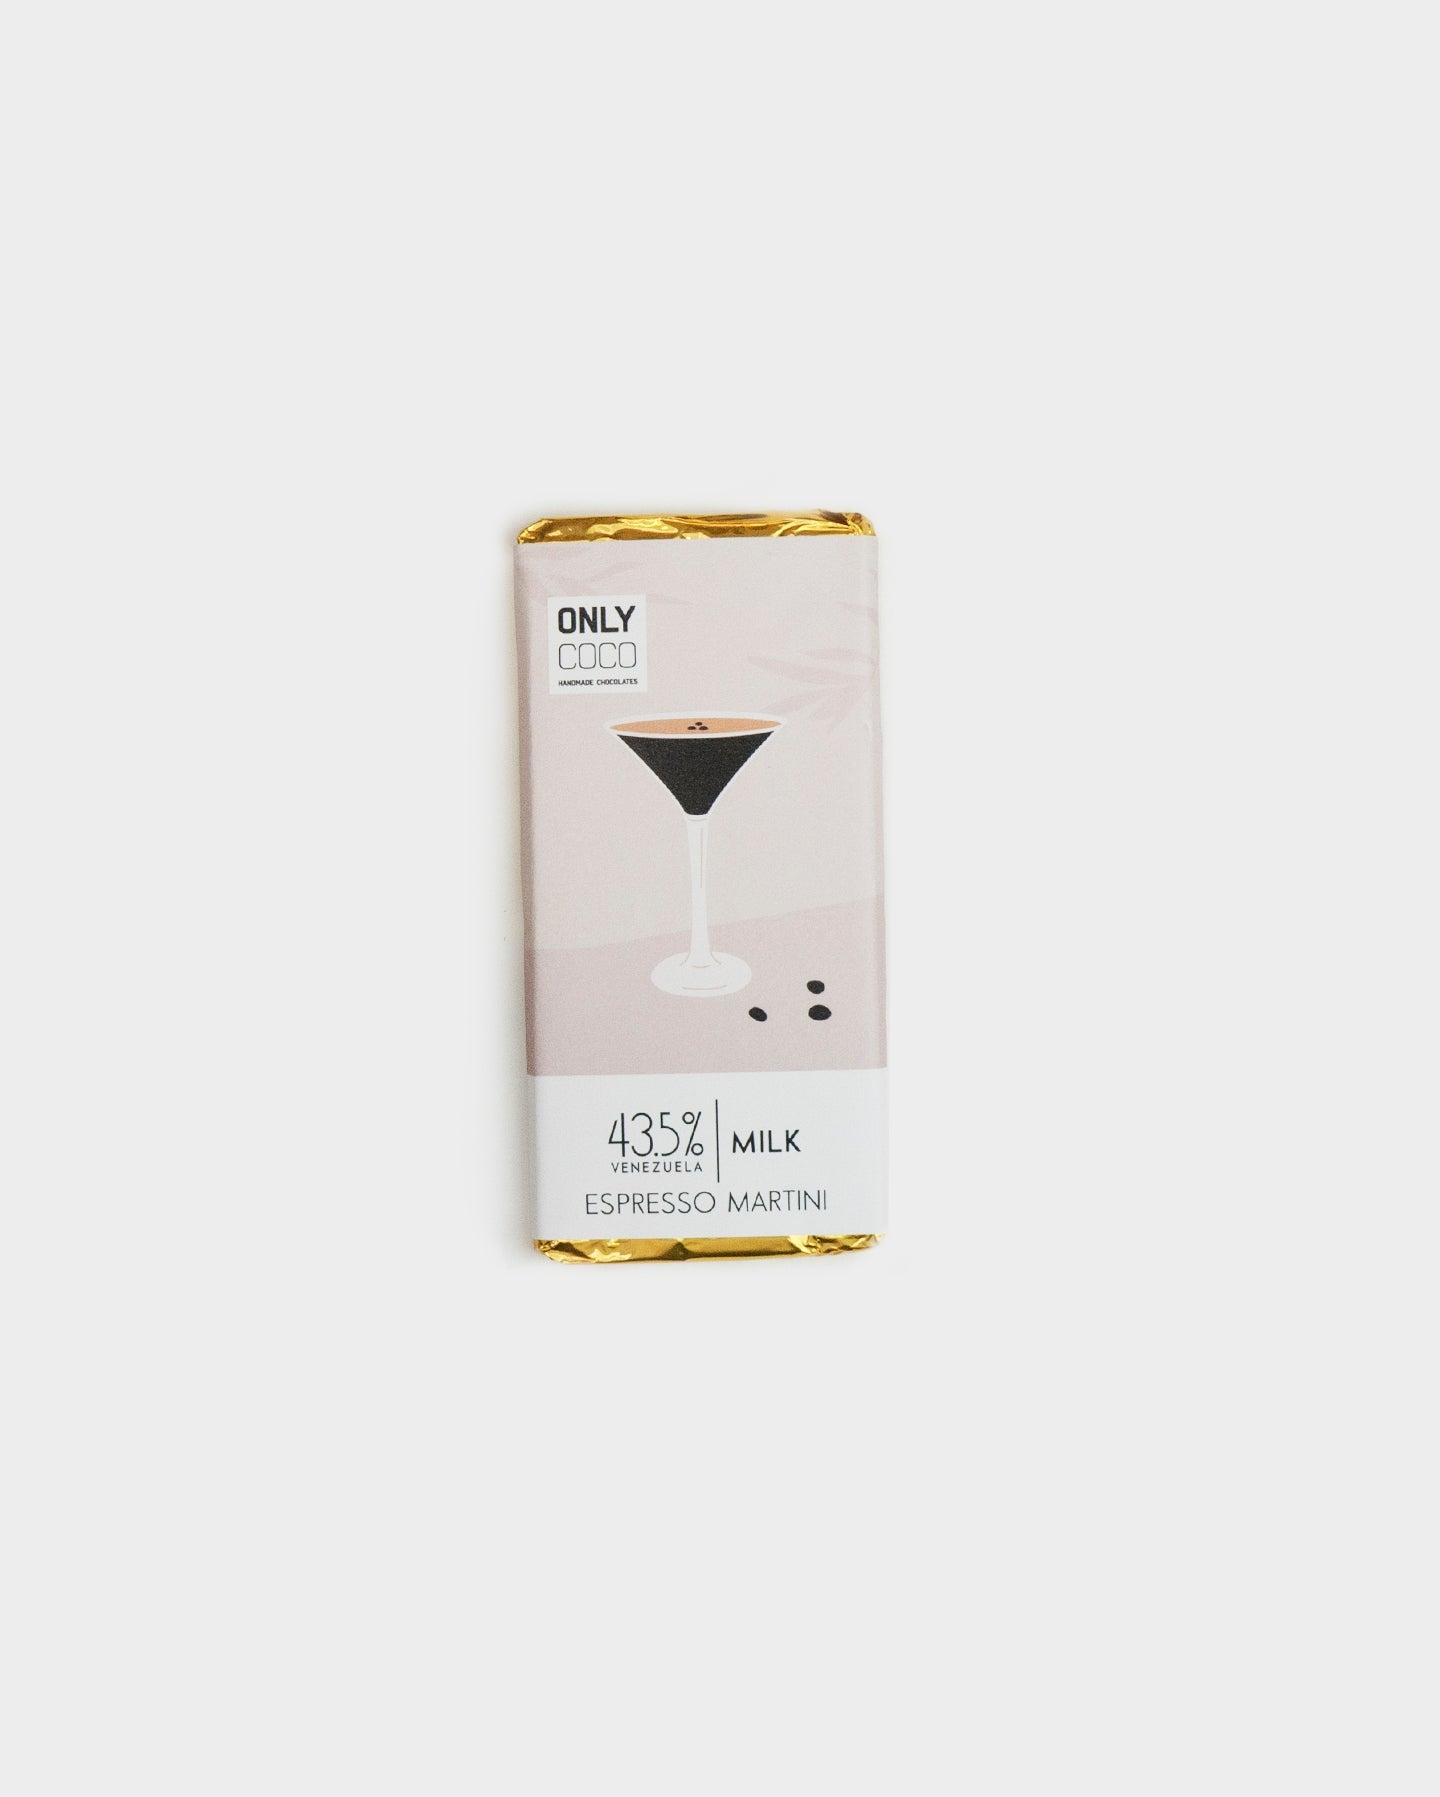 Espresso Martini Chocolate Bar - 43.5% Venezuelan Milk Chocolate